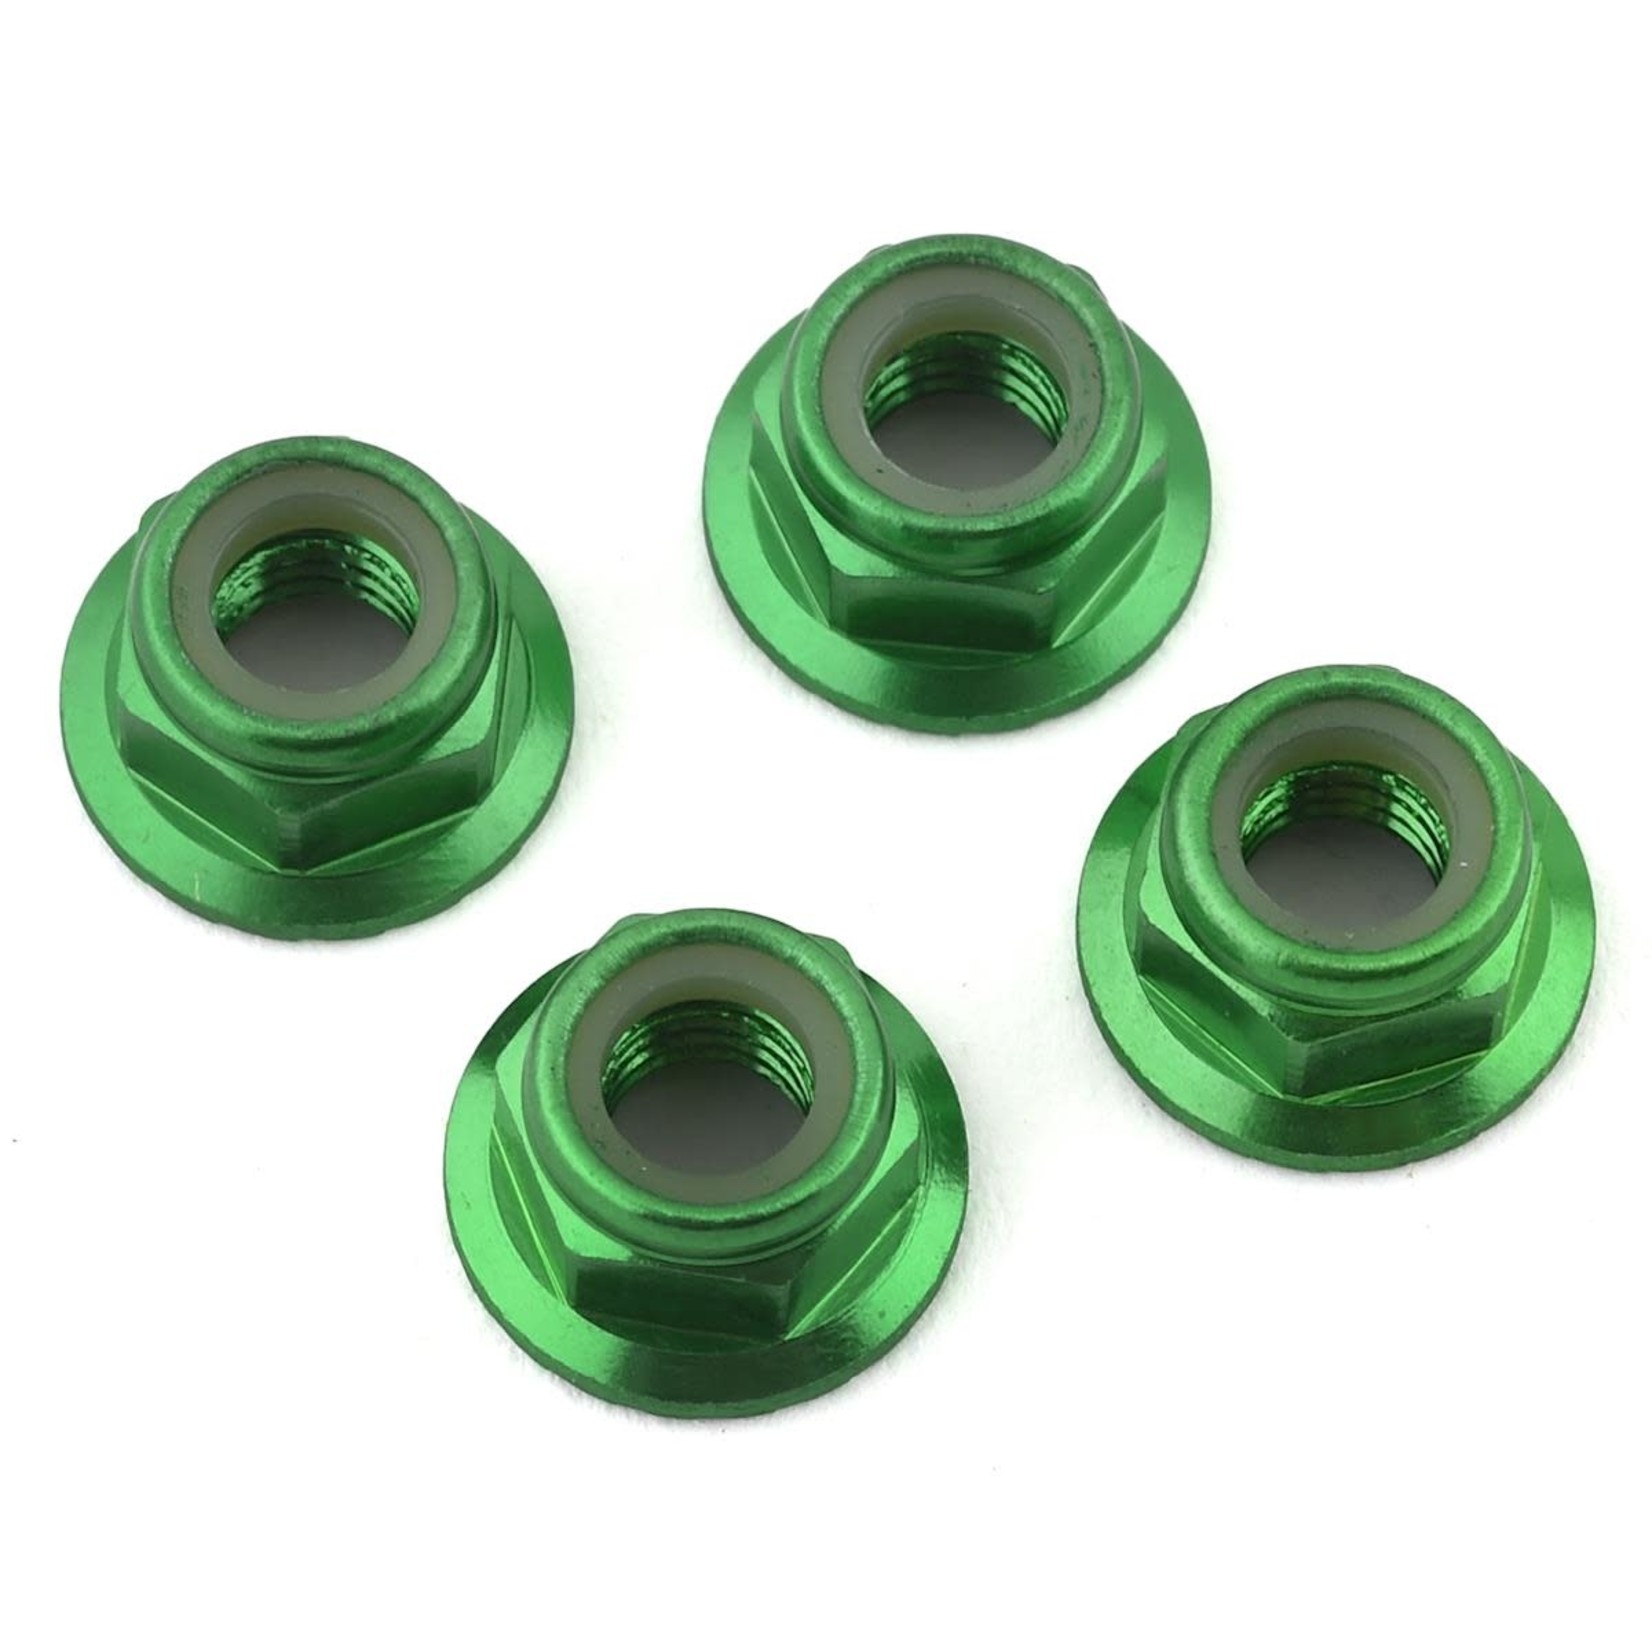 Traxxas Traxxas 5mm Aluminum Flanged Nylon Locking Nuts (Green) (4) #8447G